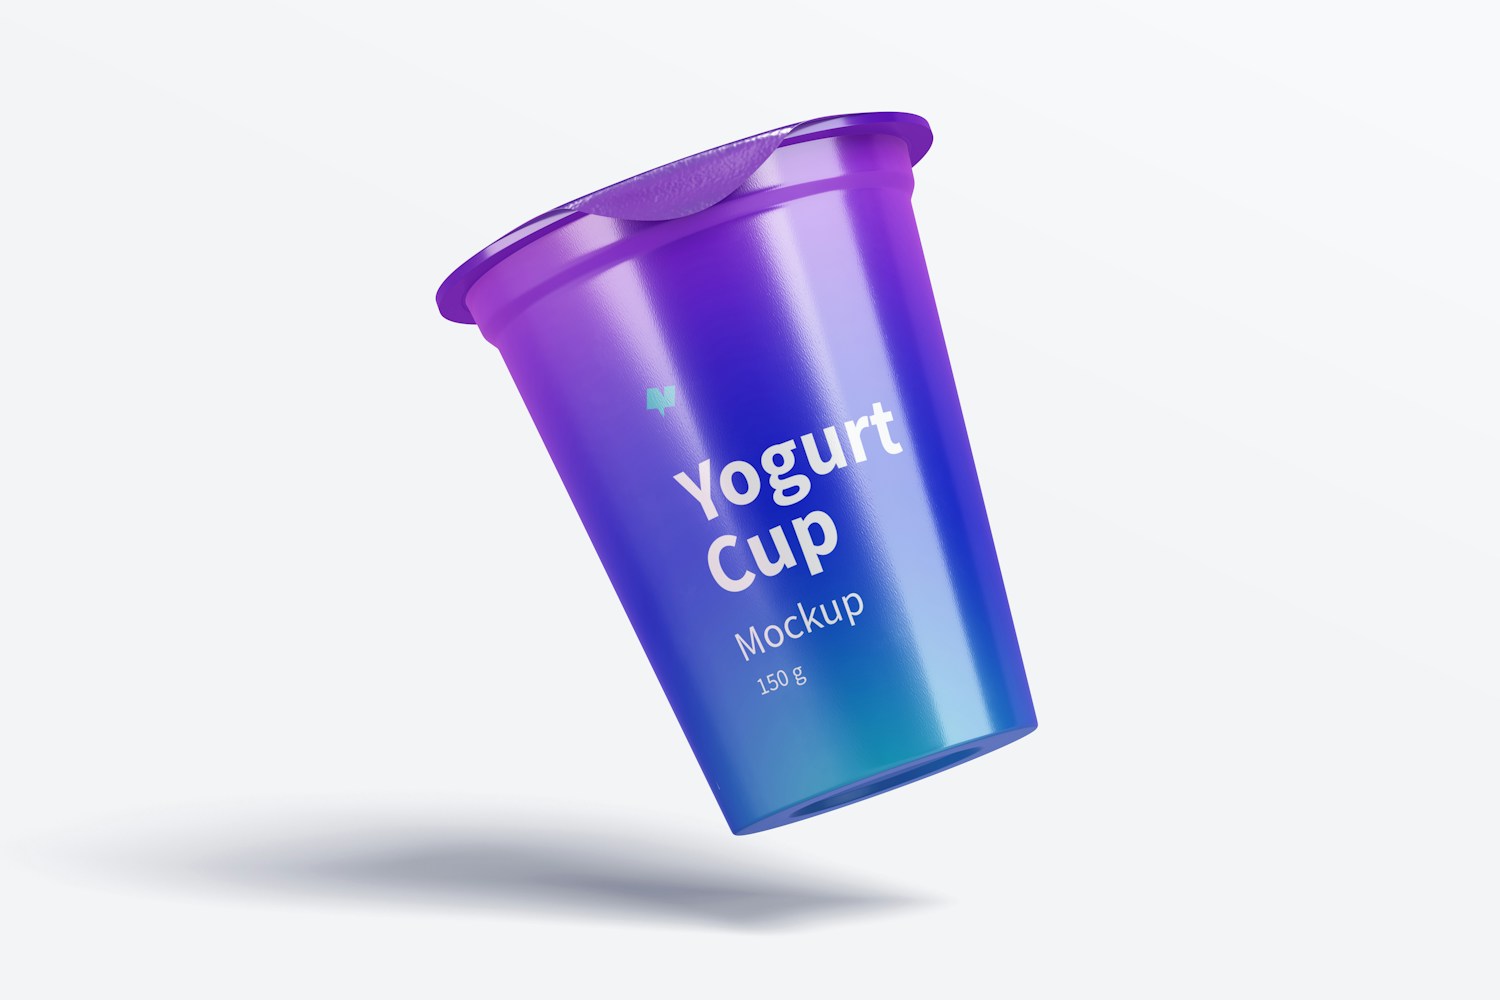 150 g Yogurt Cup Mockup, Floating